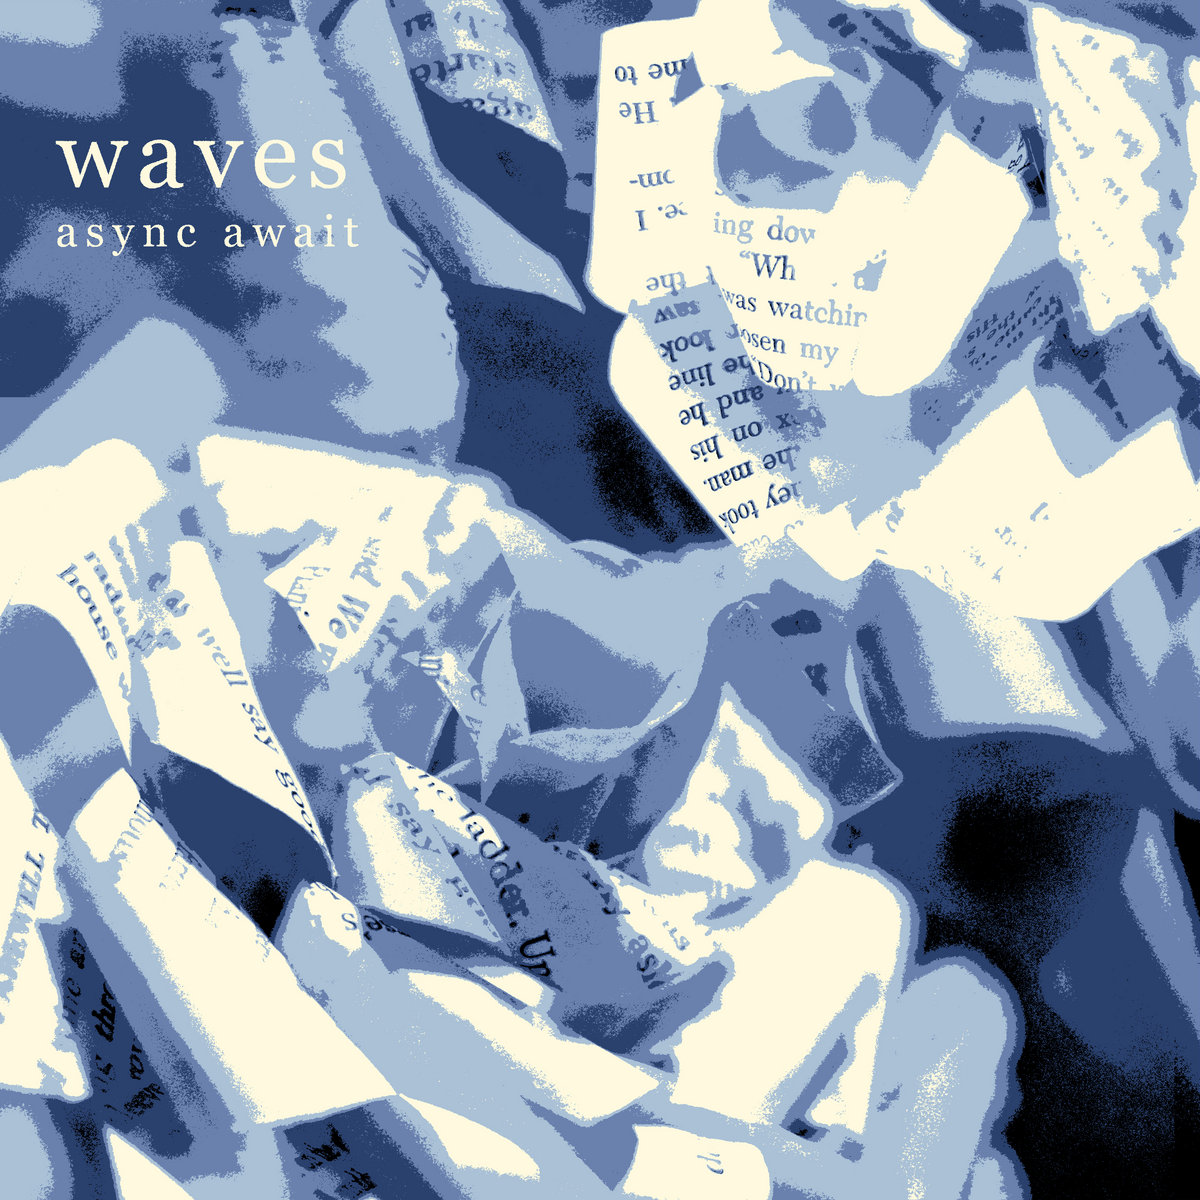 Async Await: “Waves”